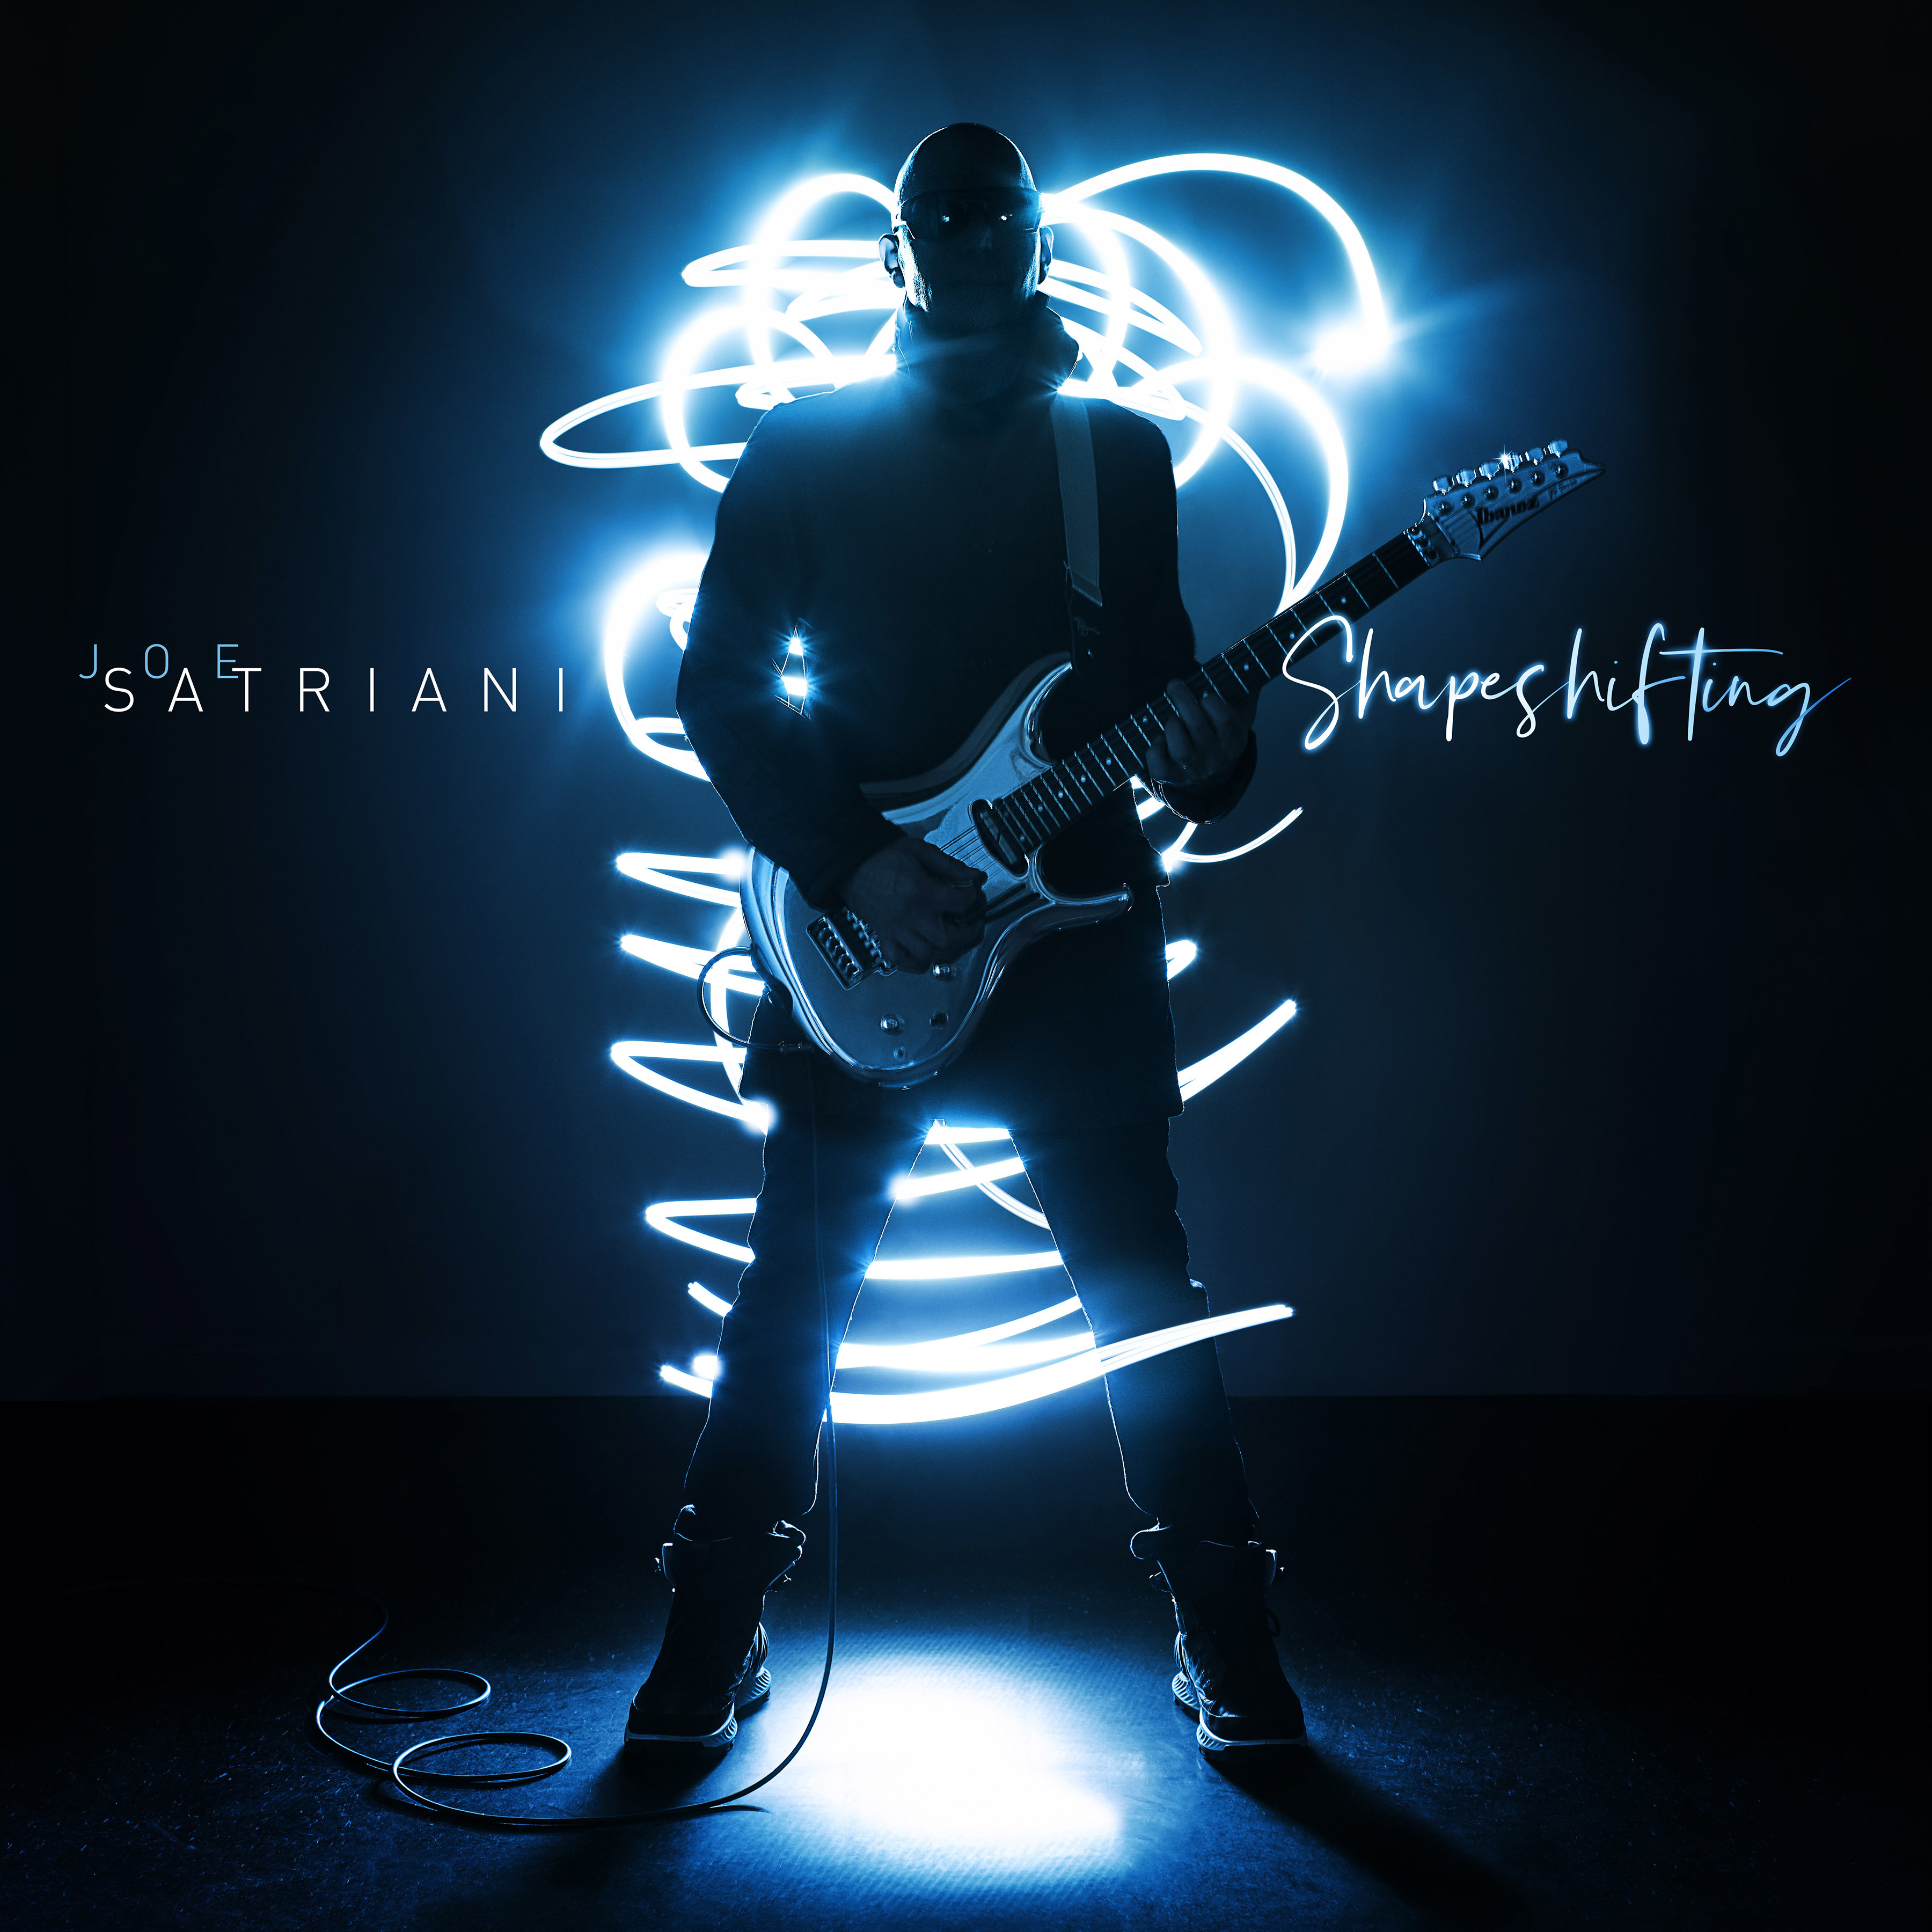 Joe Satriani's "Shapeshifting" Album Yields The Highest Chart Position of His Career!